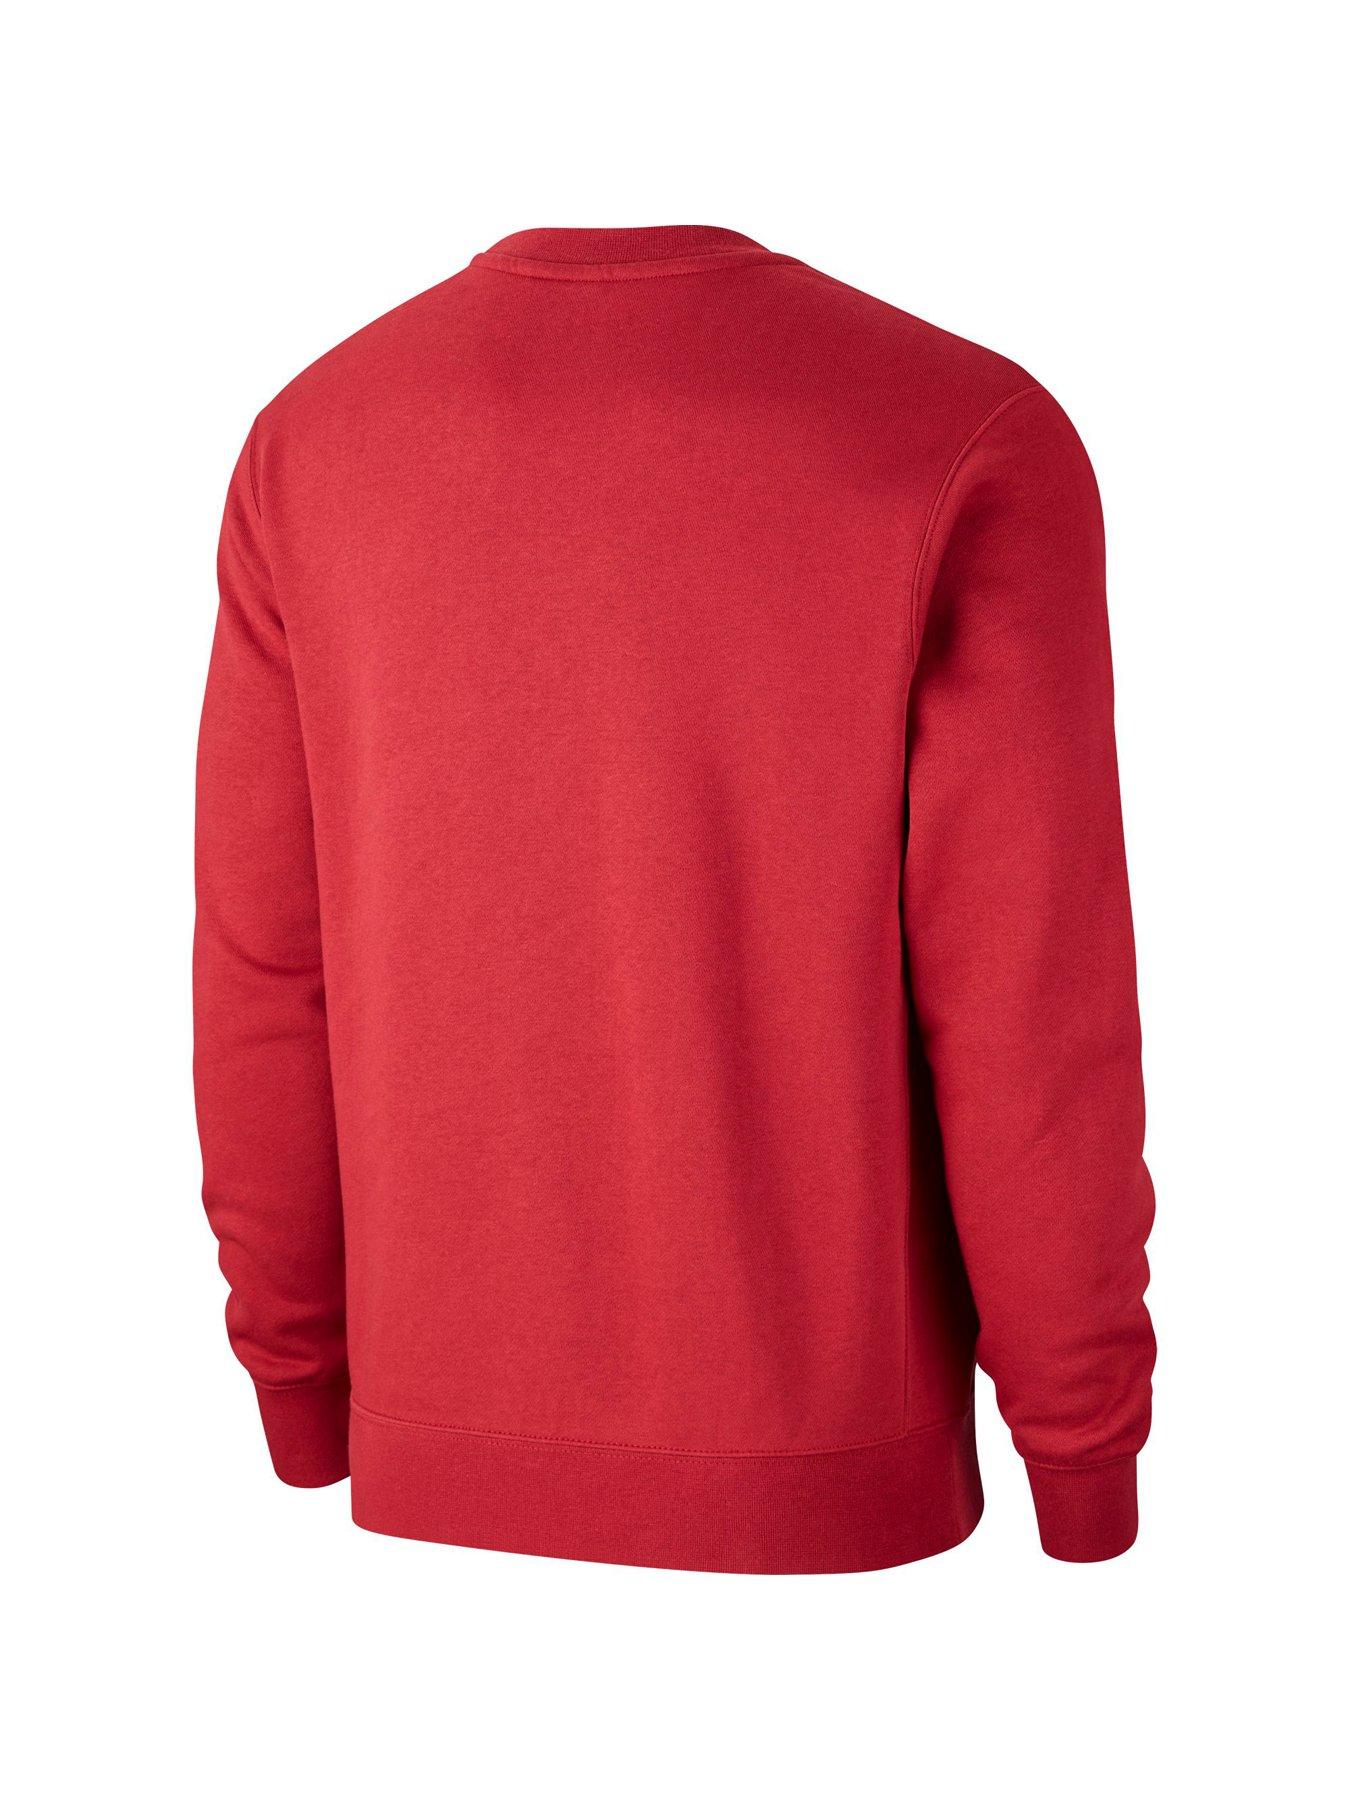 nike club crew sweatshirt red